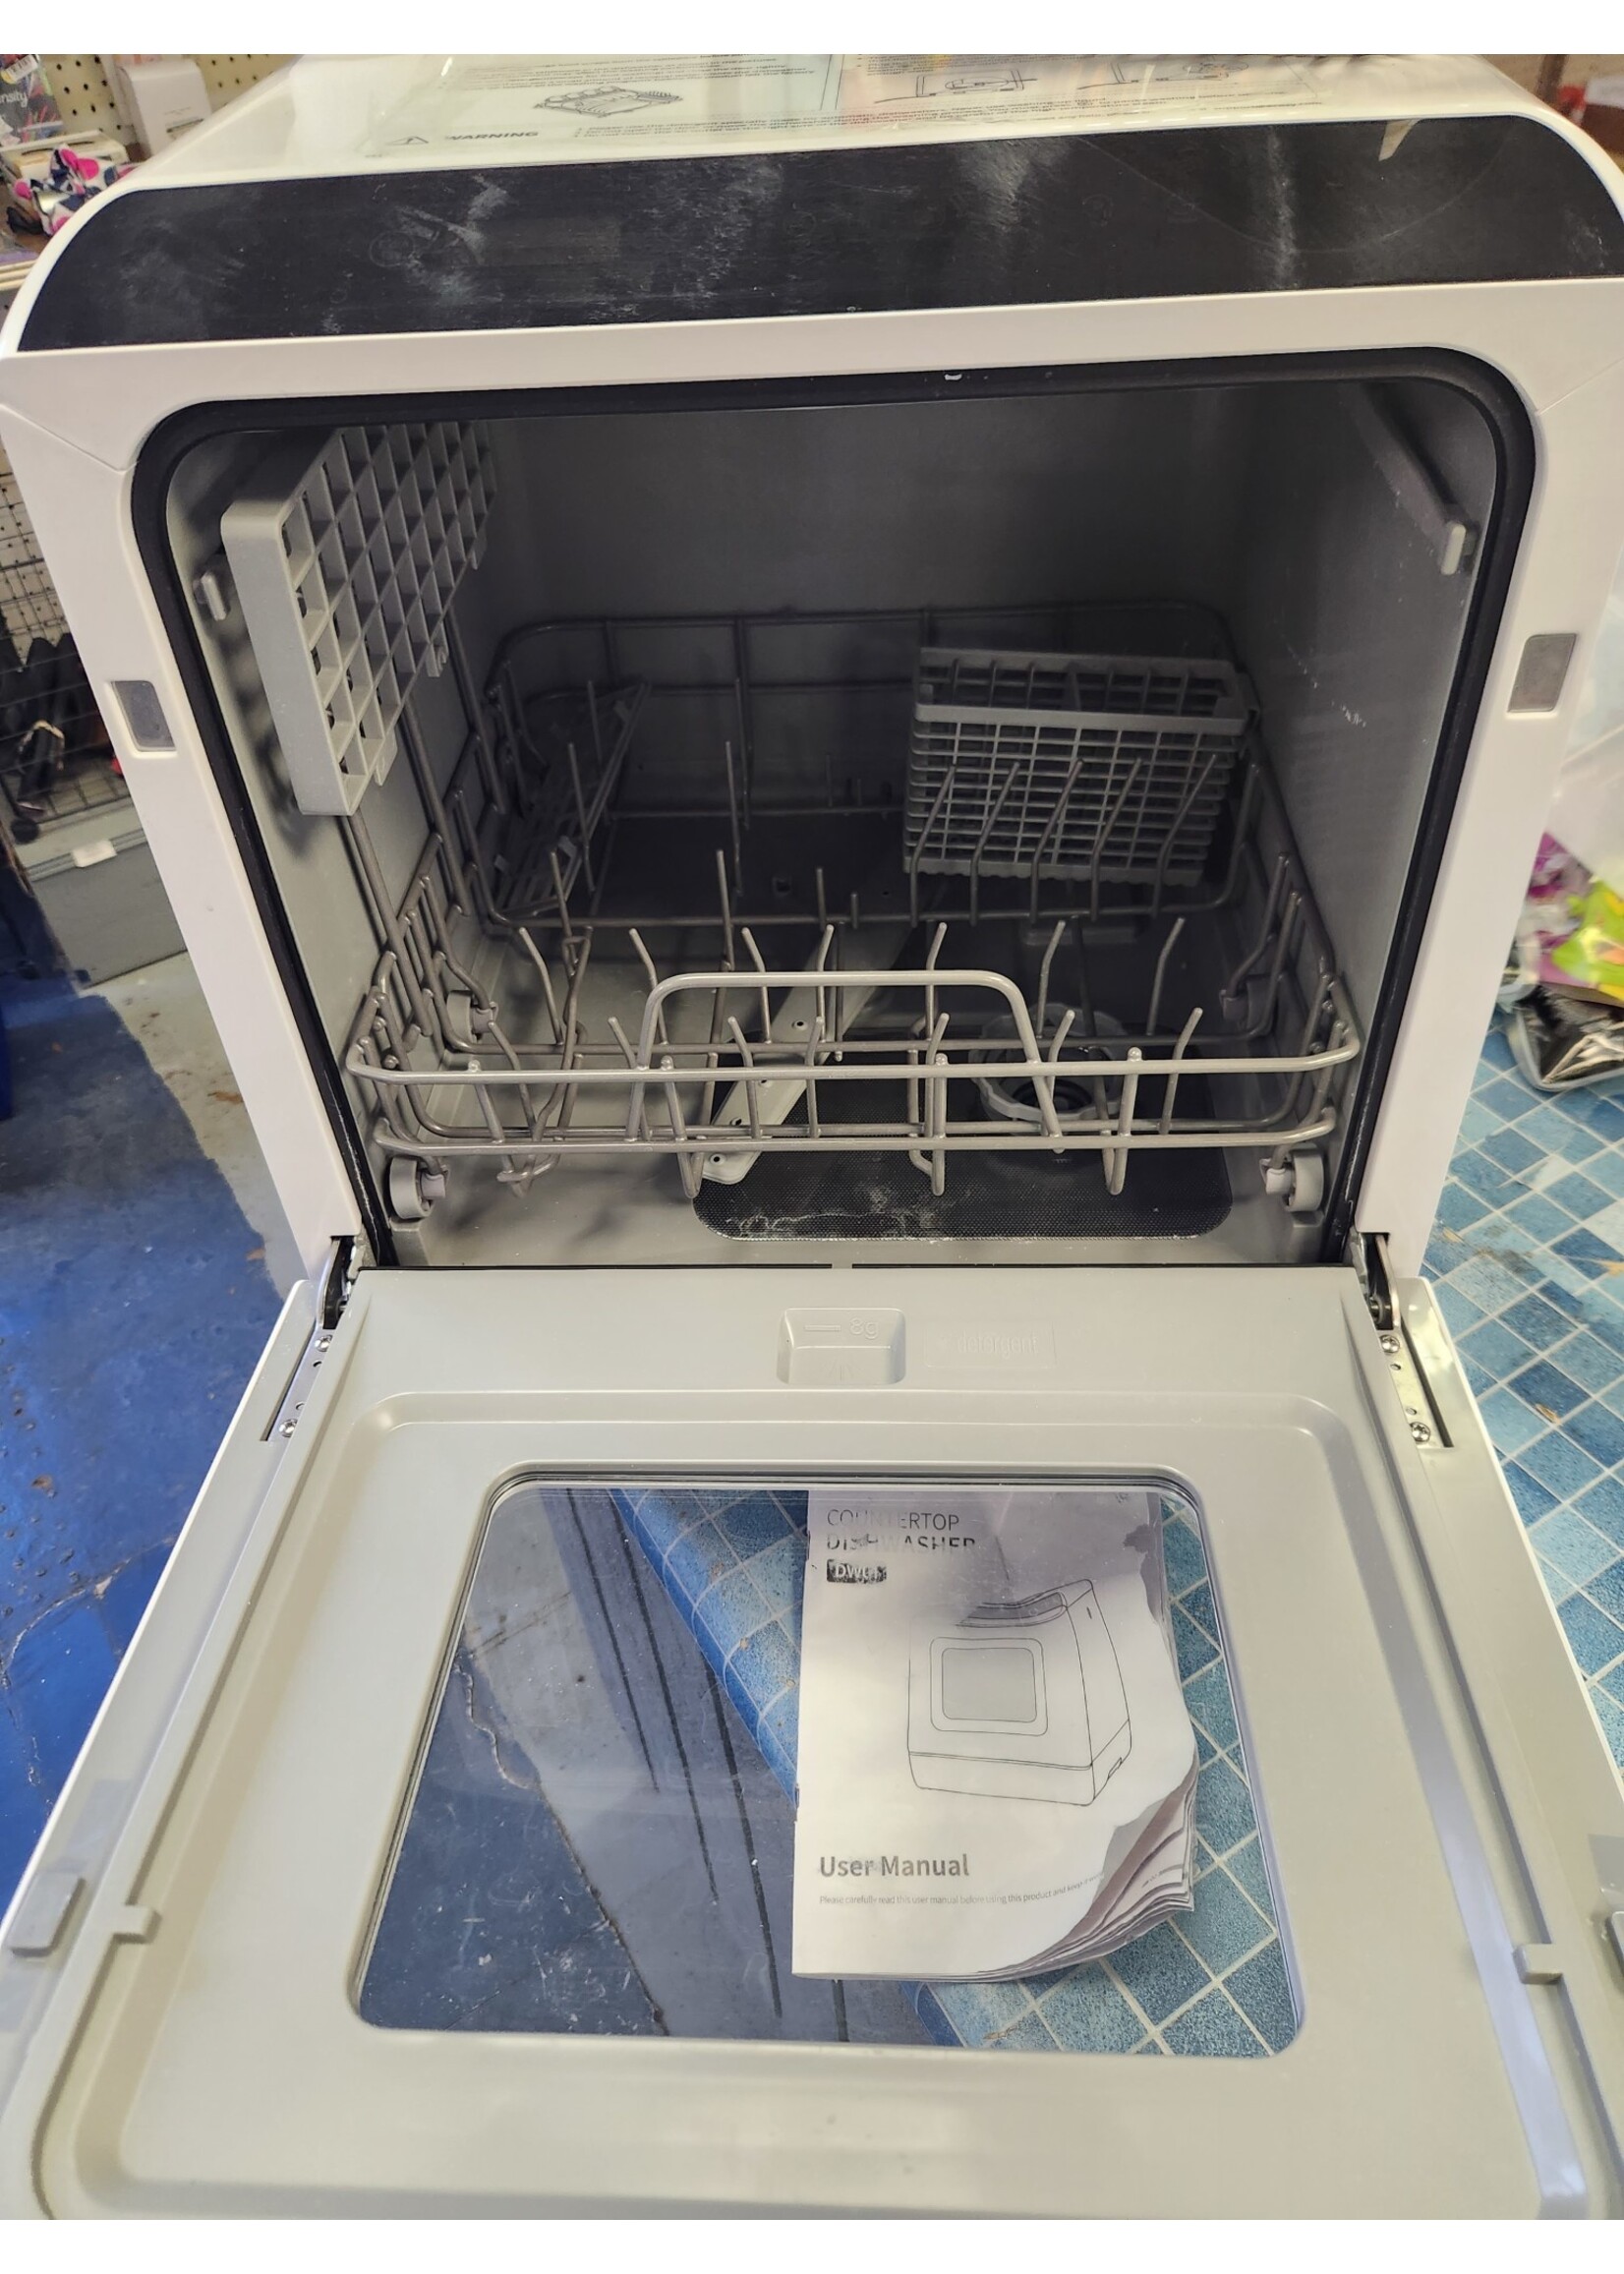 Portable Countertop Dishwasher, Compact Mini Dishwasher with 5L